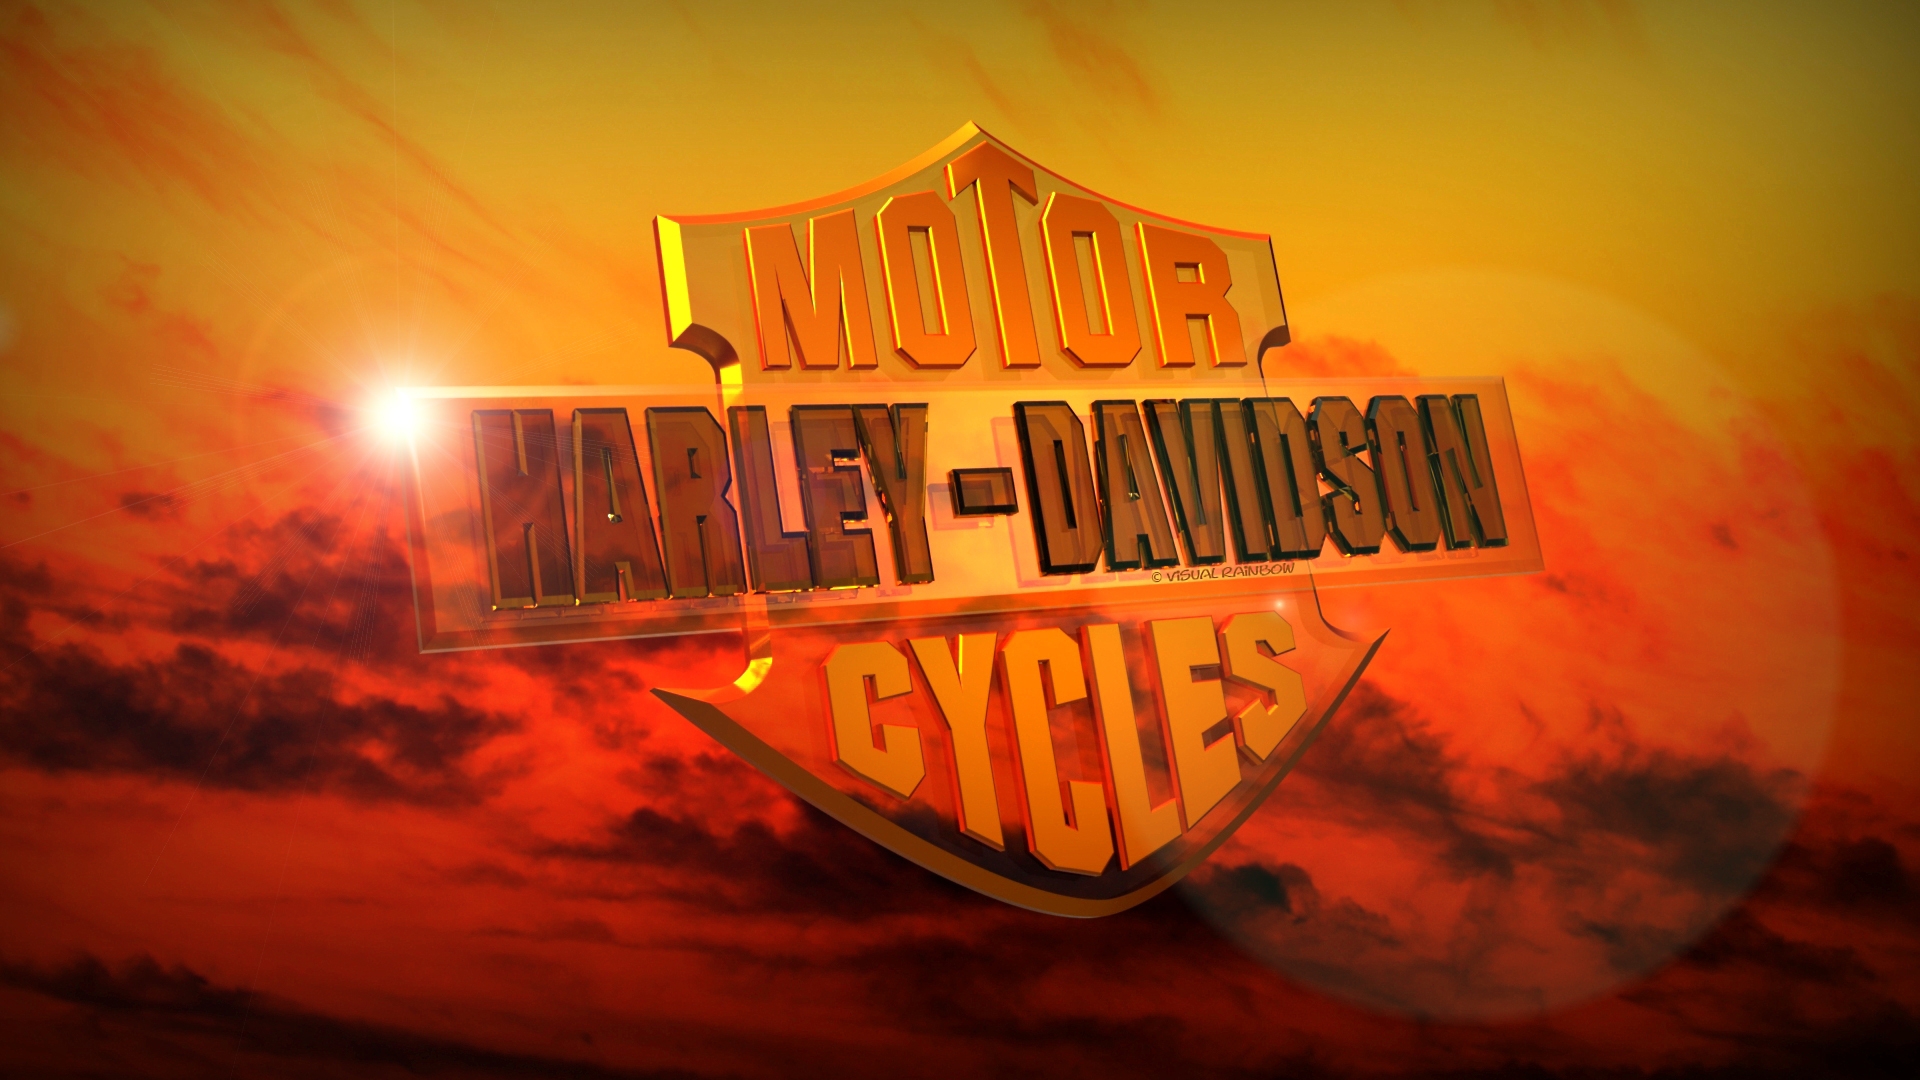 Marissa Miller Harley Davidson Sunset Wallpapers For Iphone 5 ...